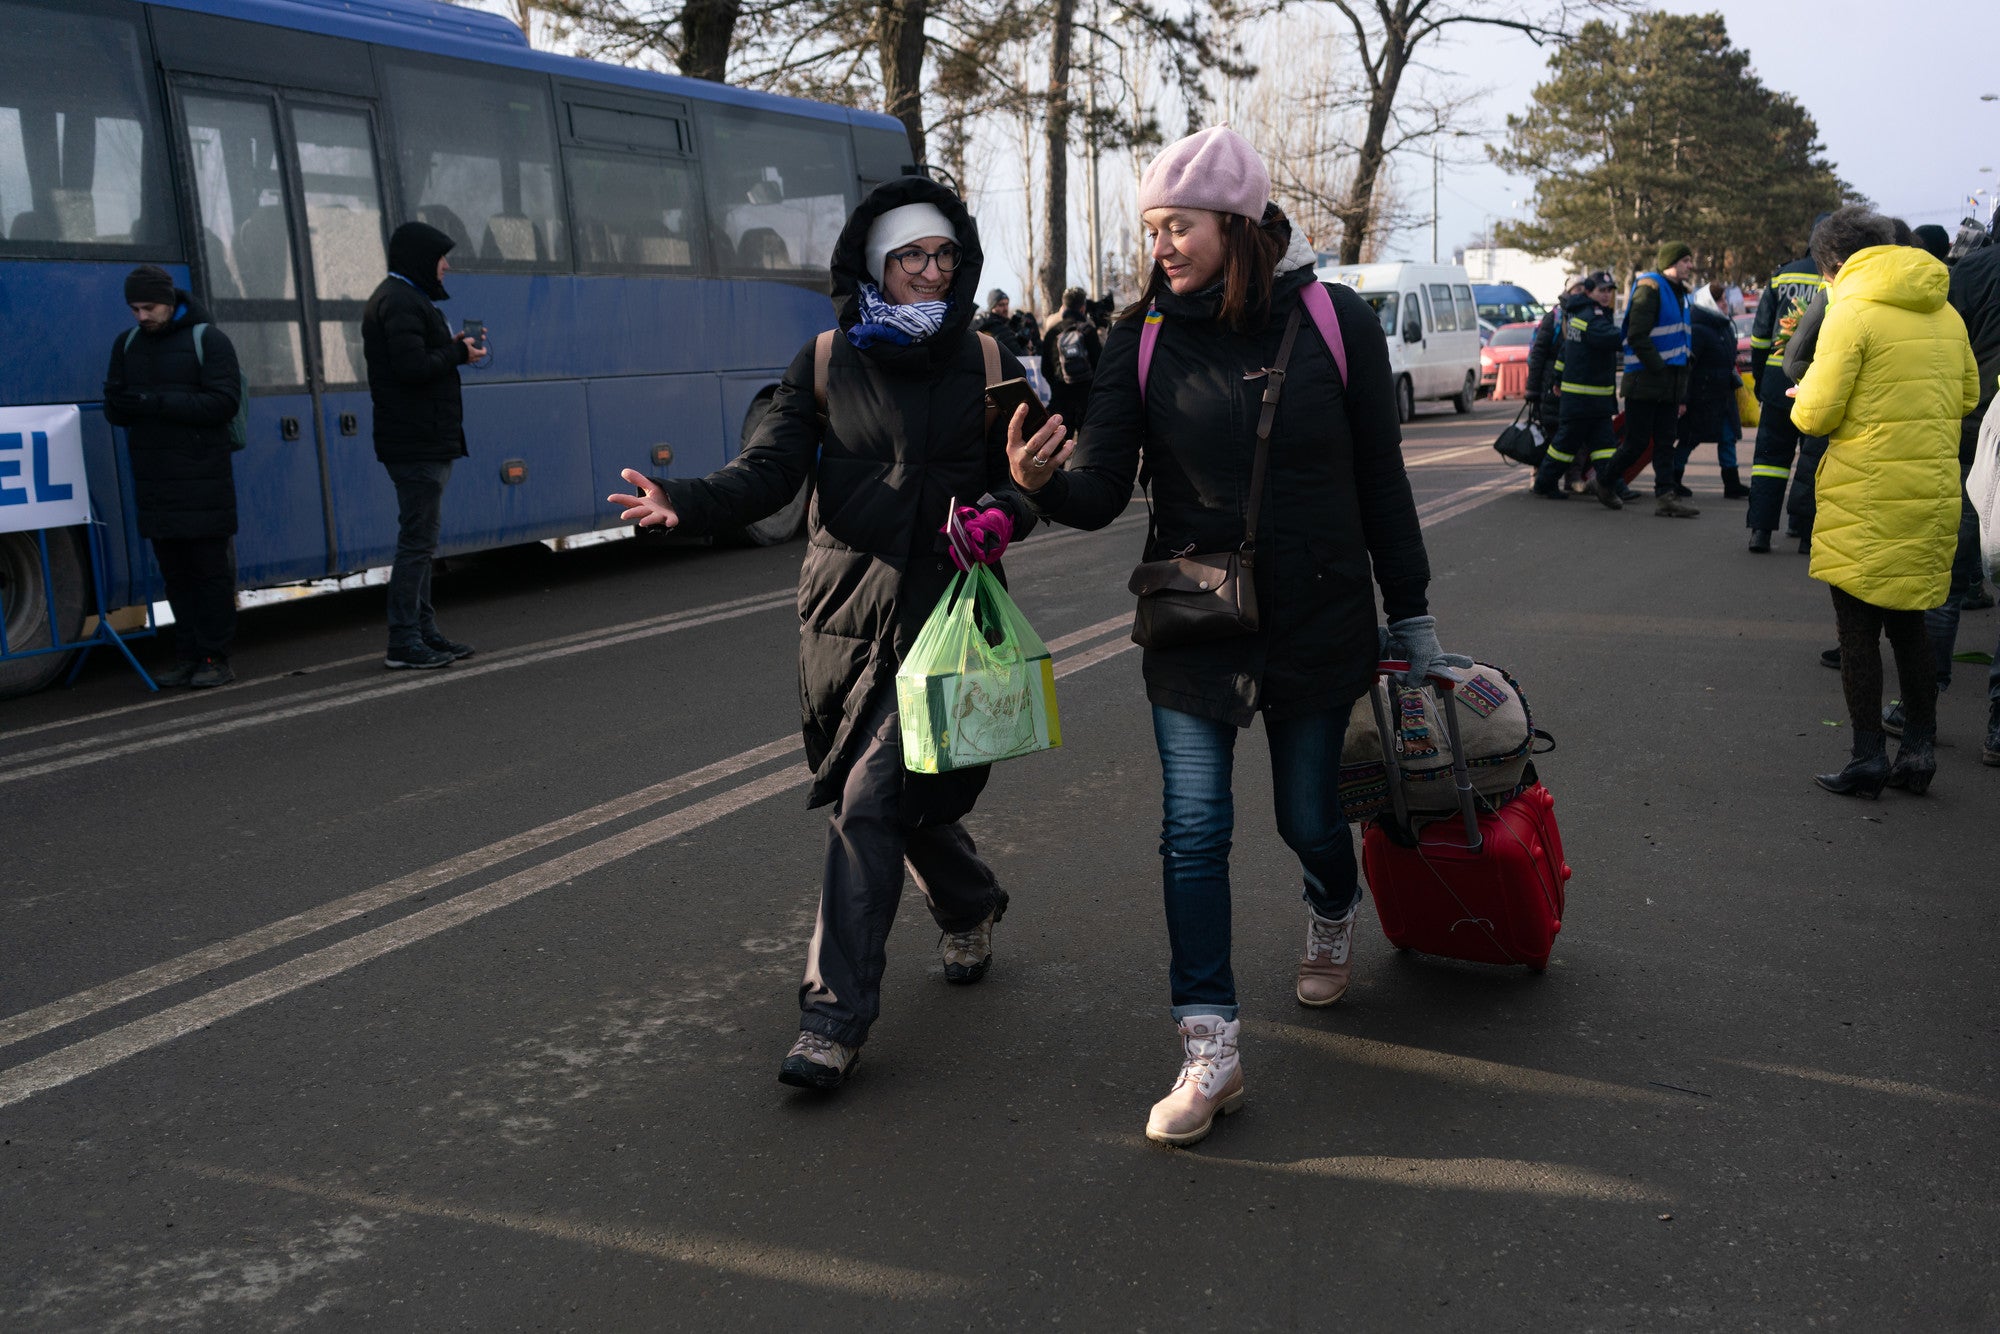 Ukrainian refugees walking next to a bus